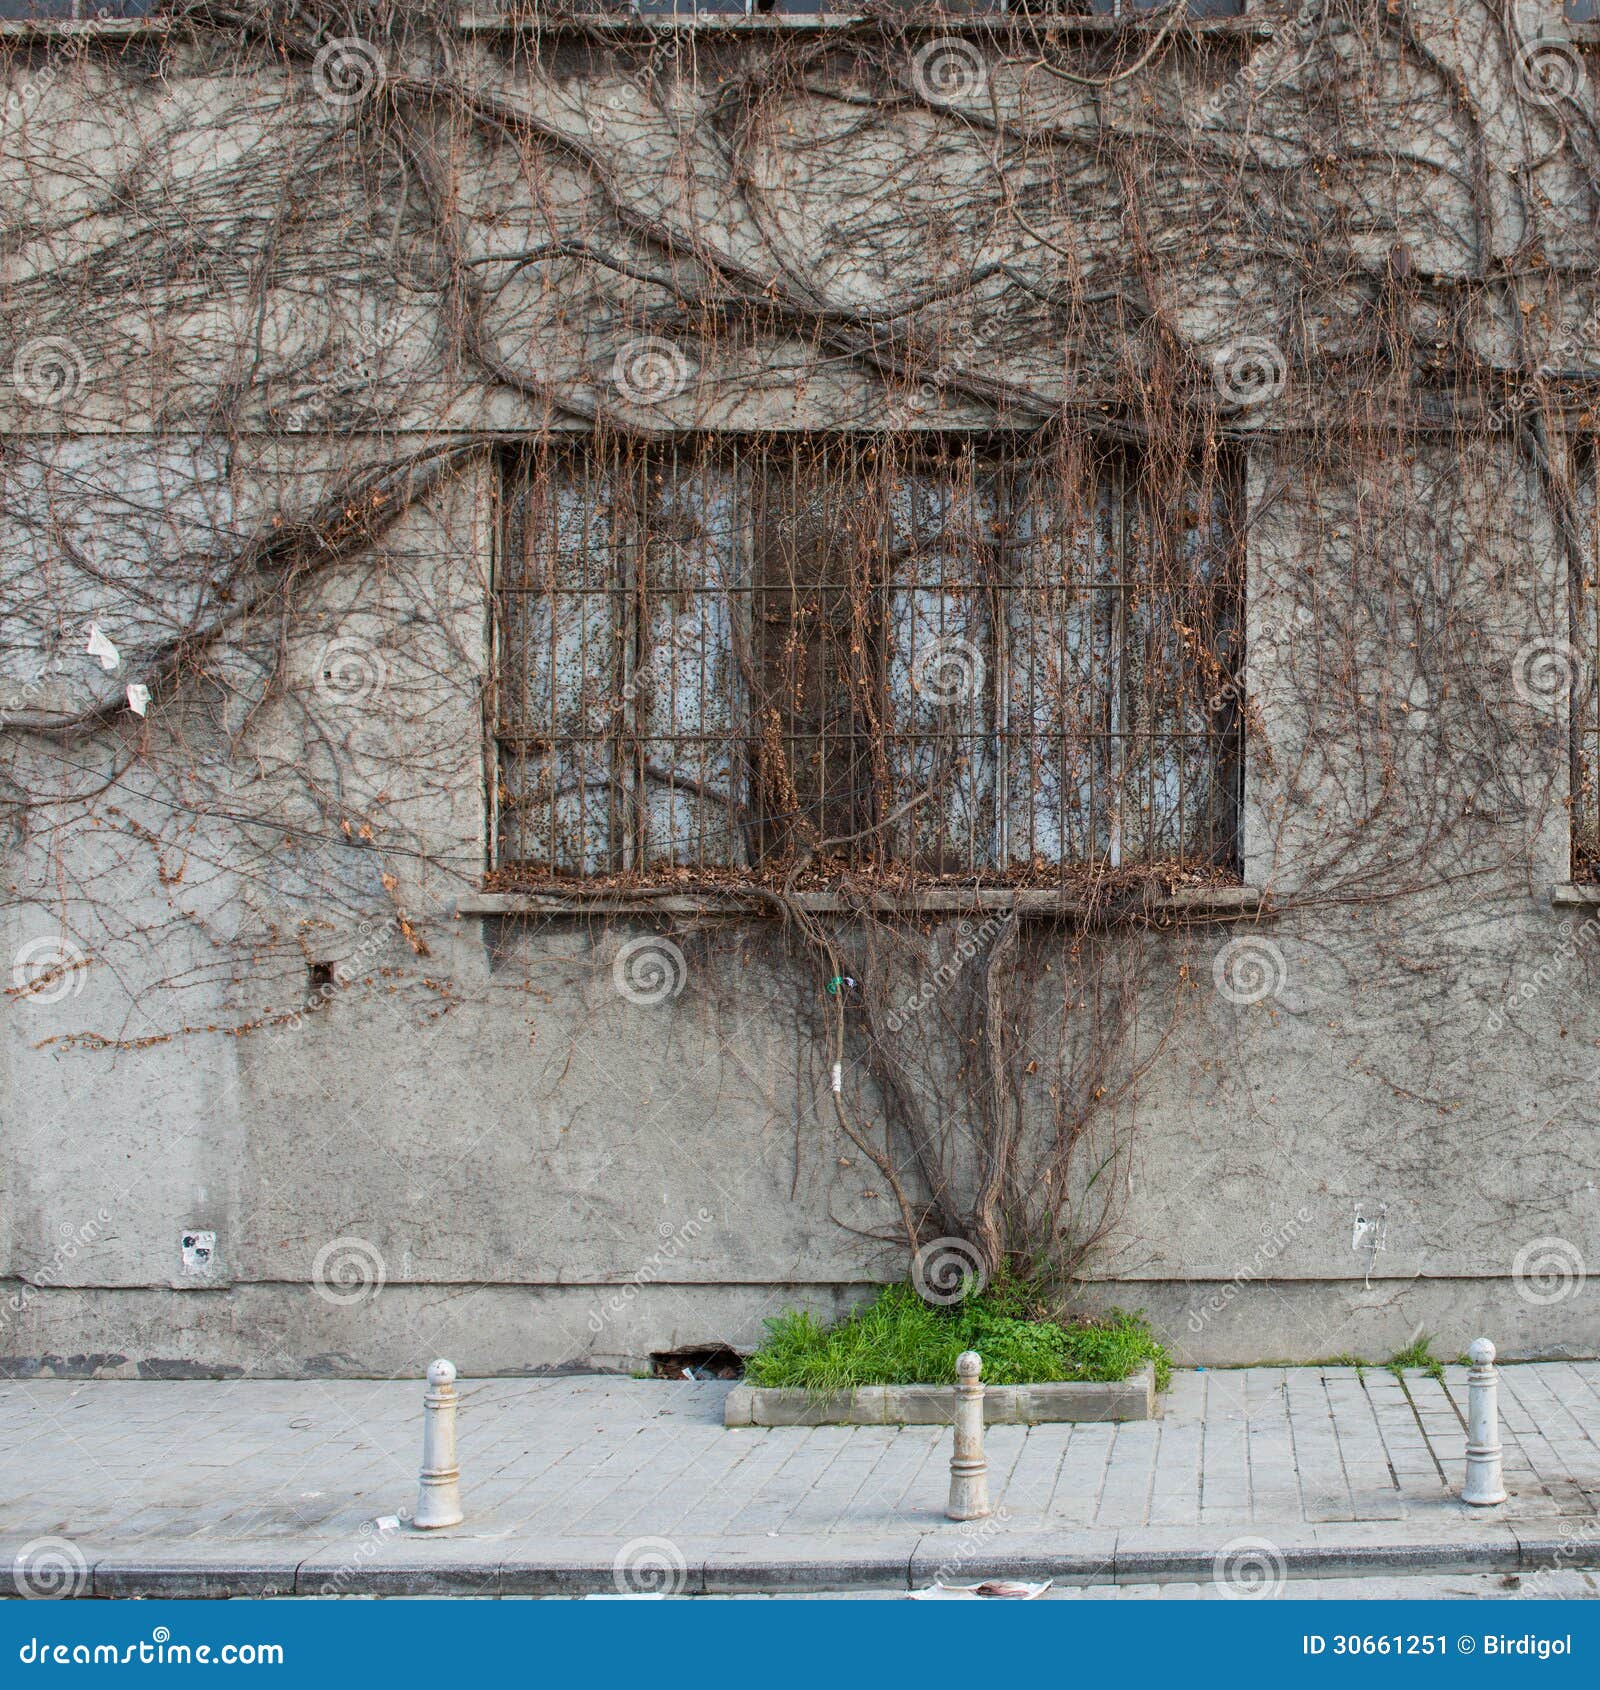 dead ivy on abandon building